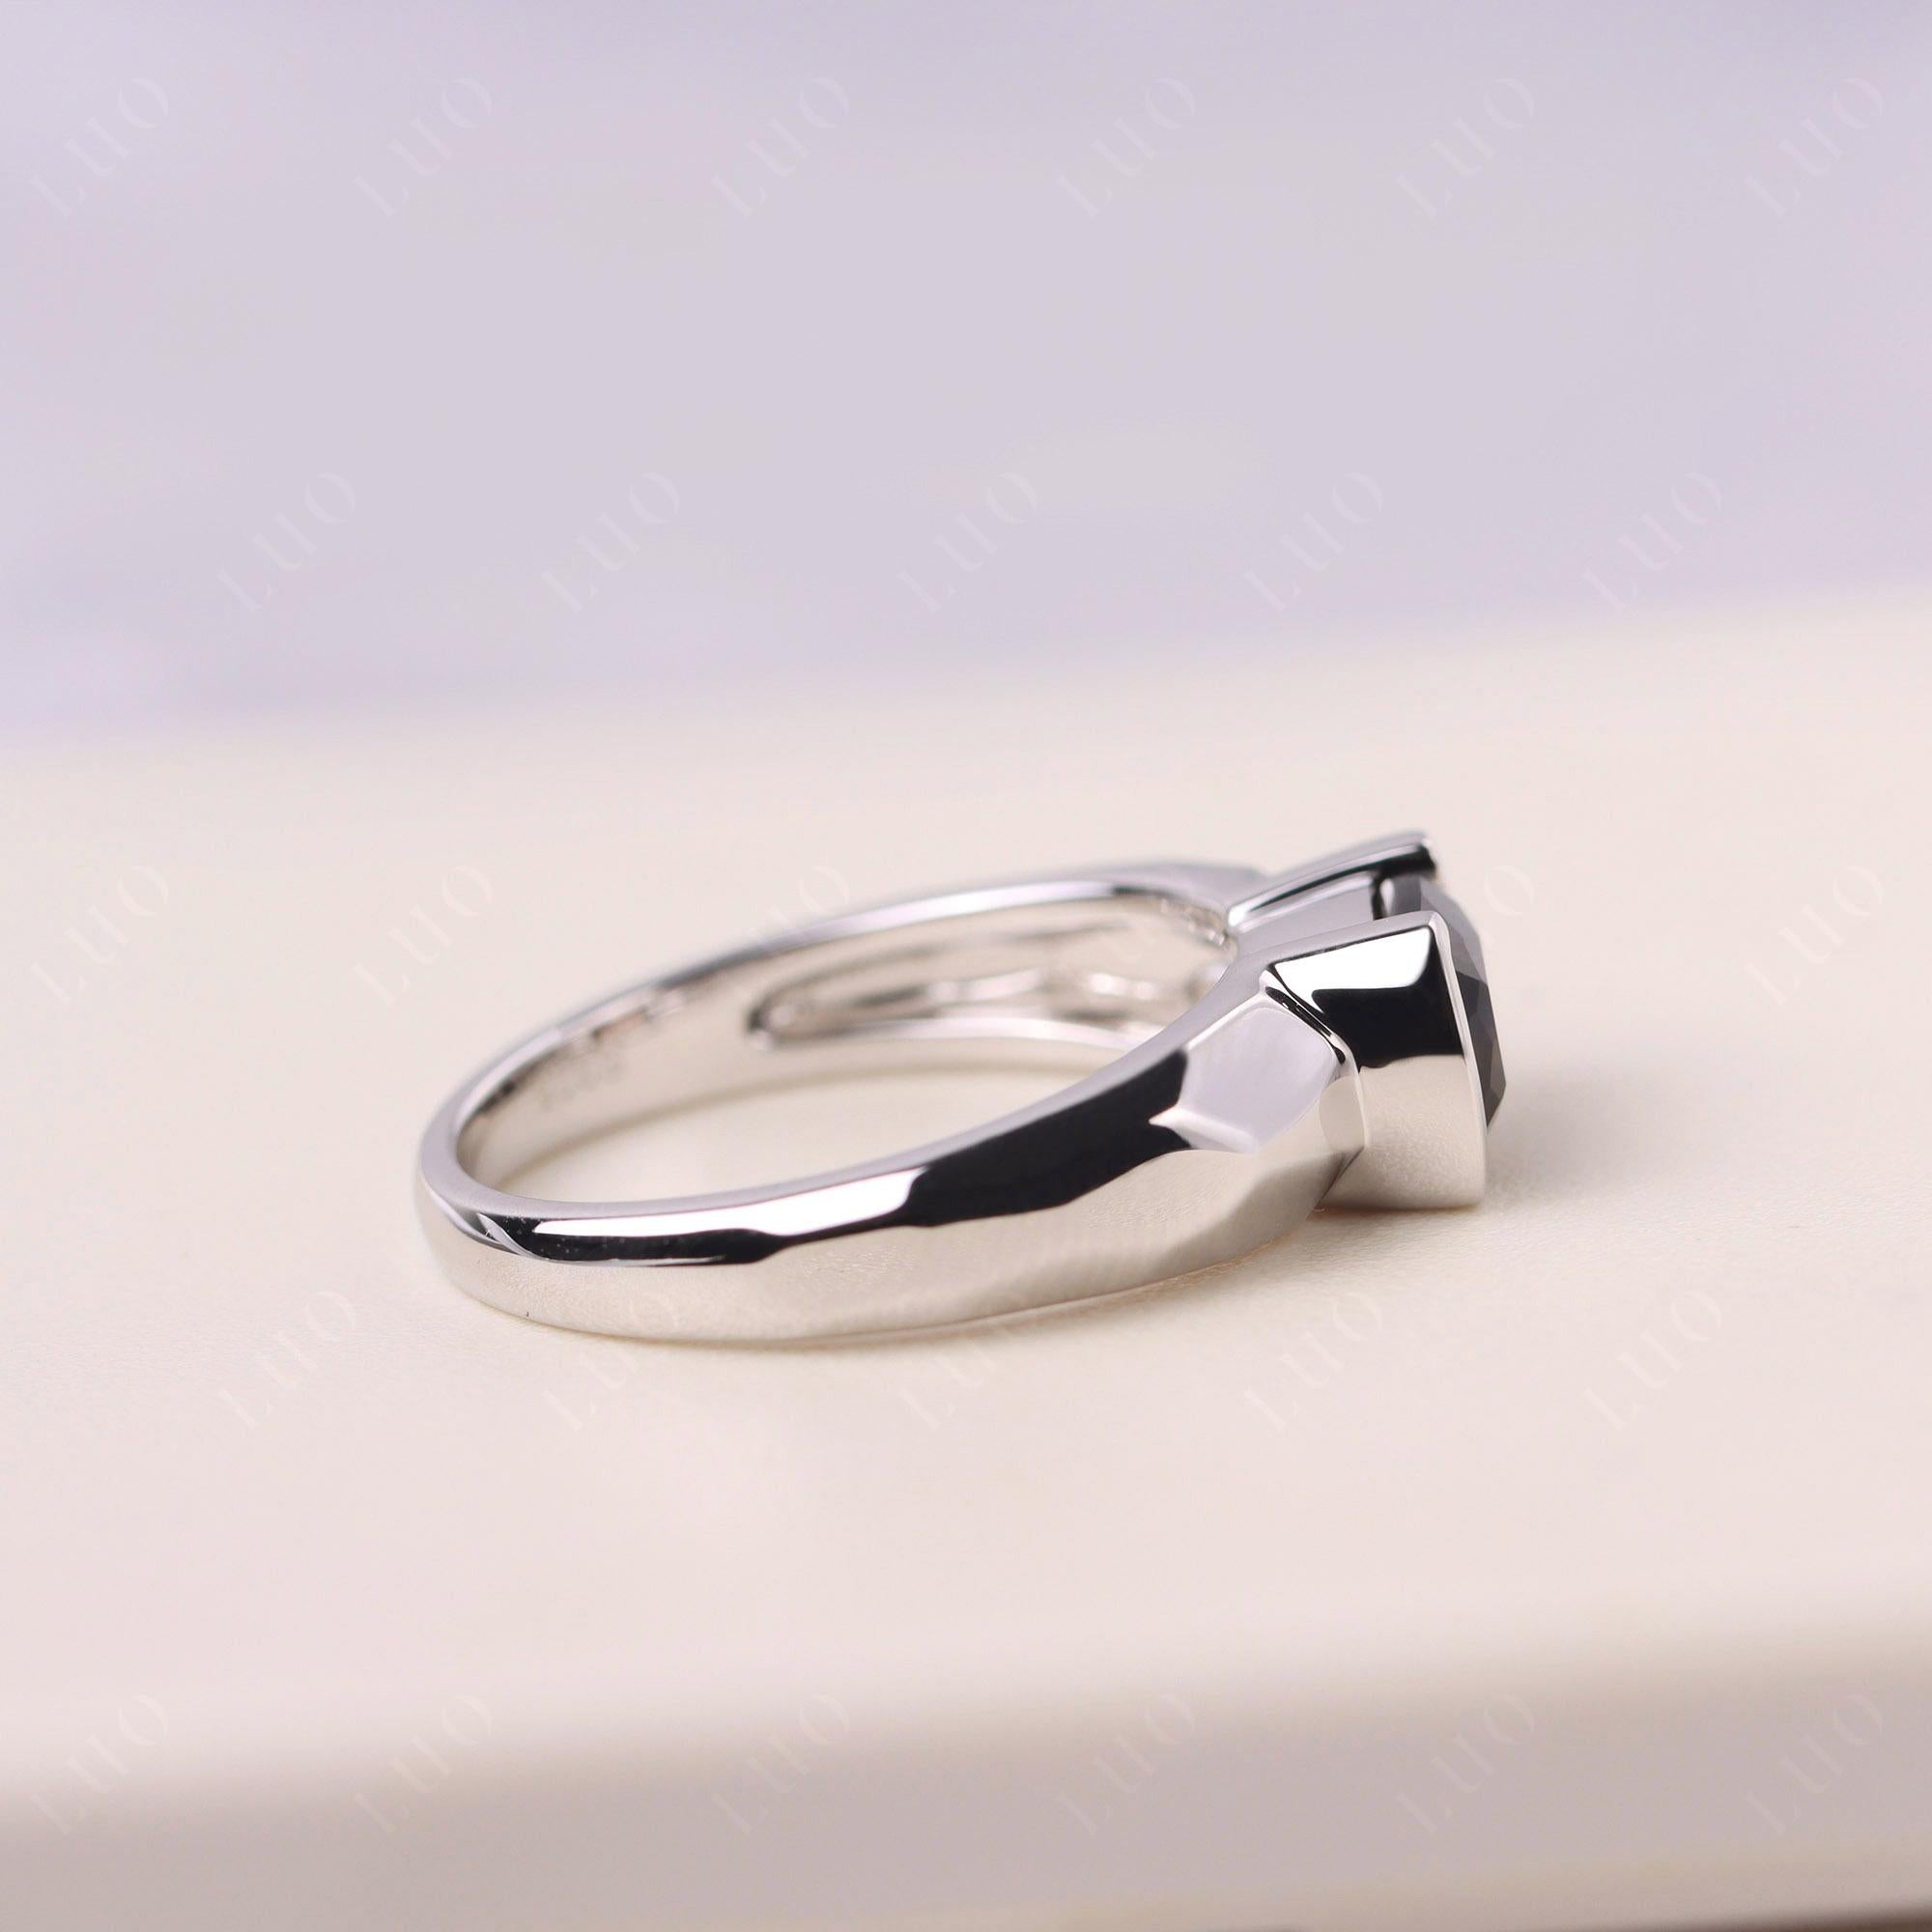 Elongated Cushion Smoky Quartz Engagement Ring - LUO Jewelry